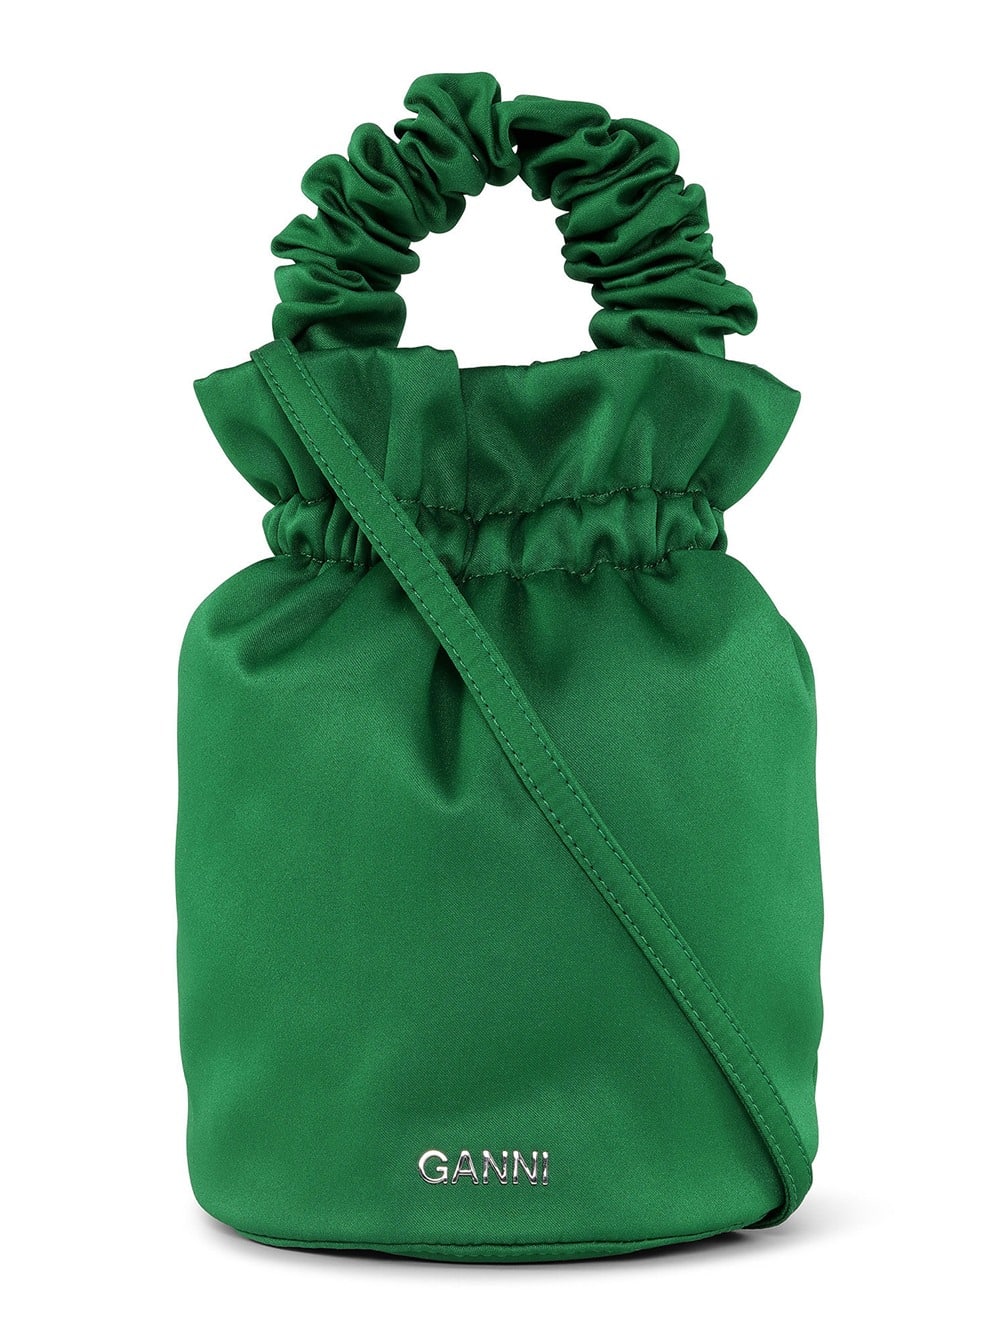 Ganni top handle bag (Size: OS)